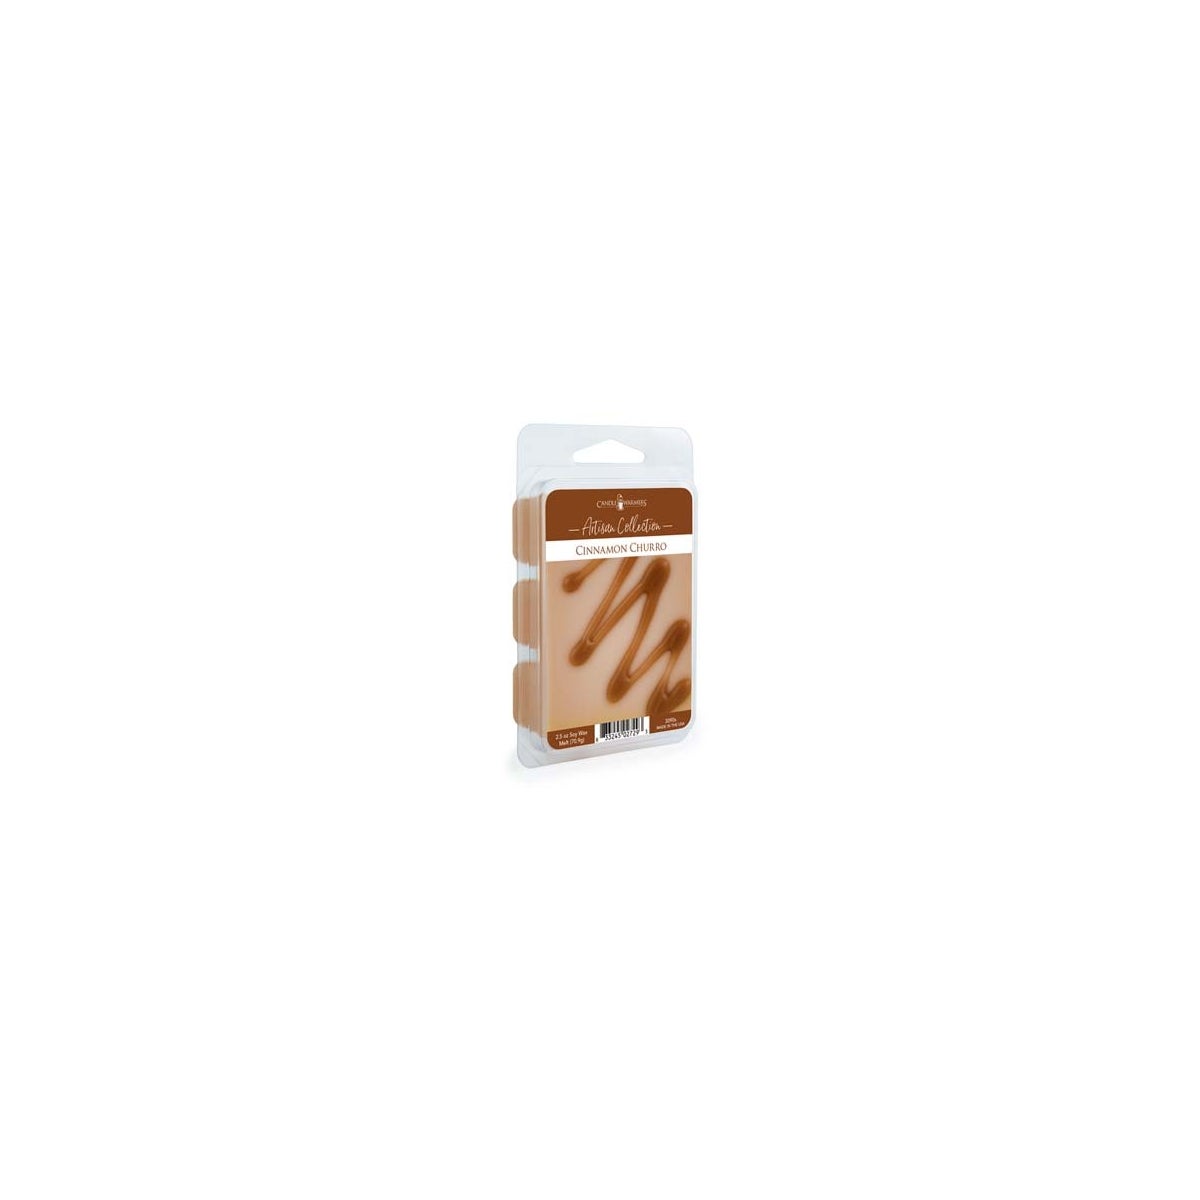 Artisan Wax Melts 2.5 oz - Cinnamon Churro